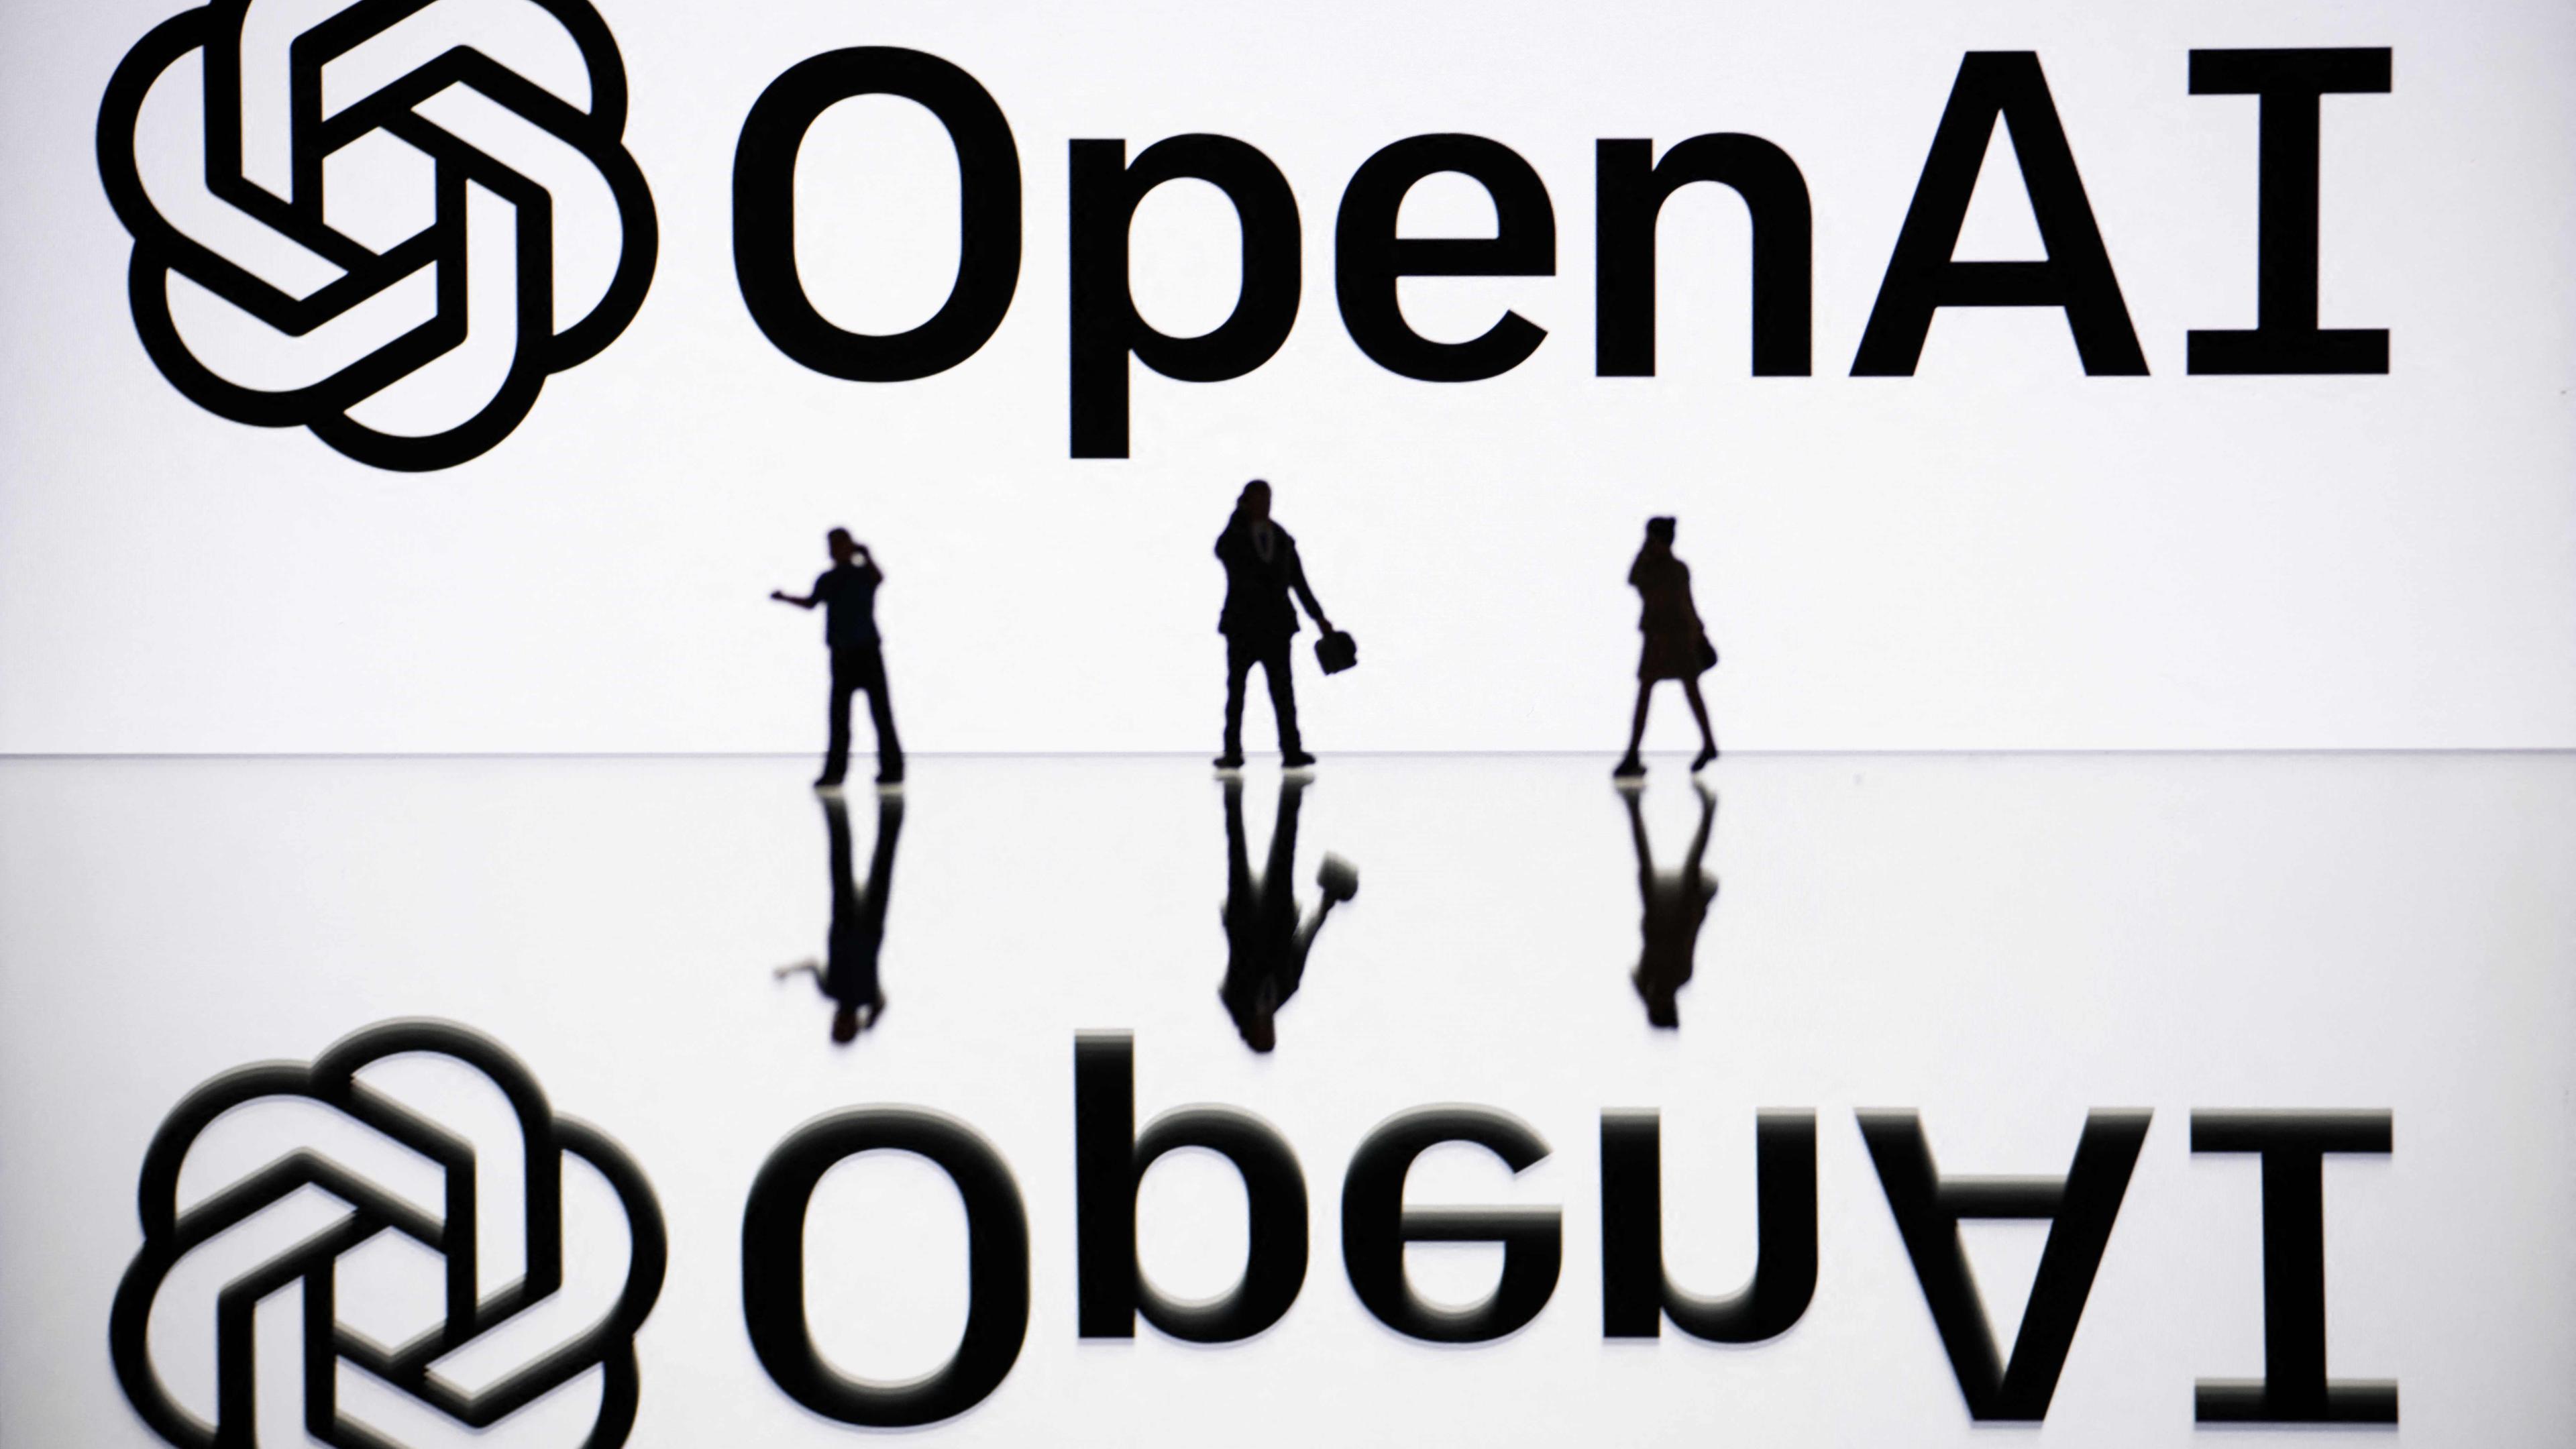 Typical: OpenAI